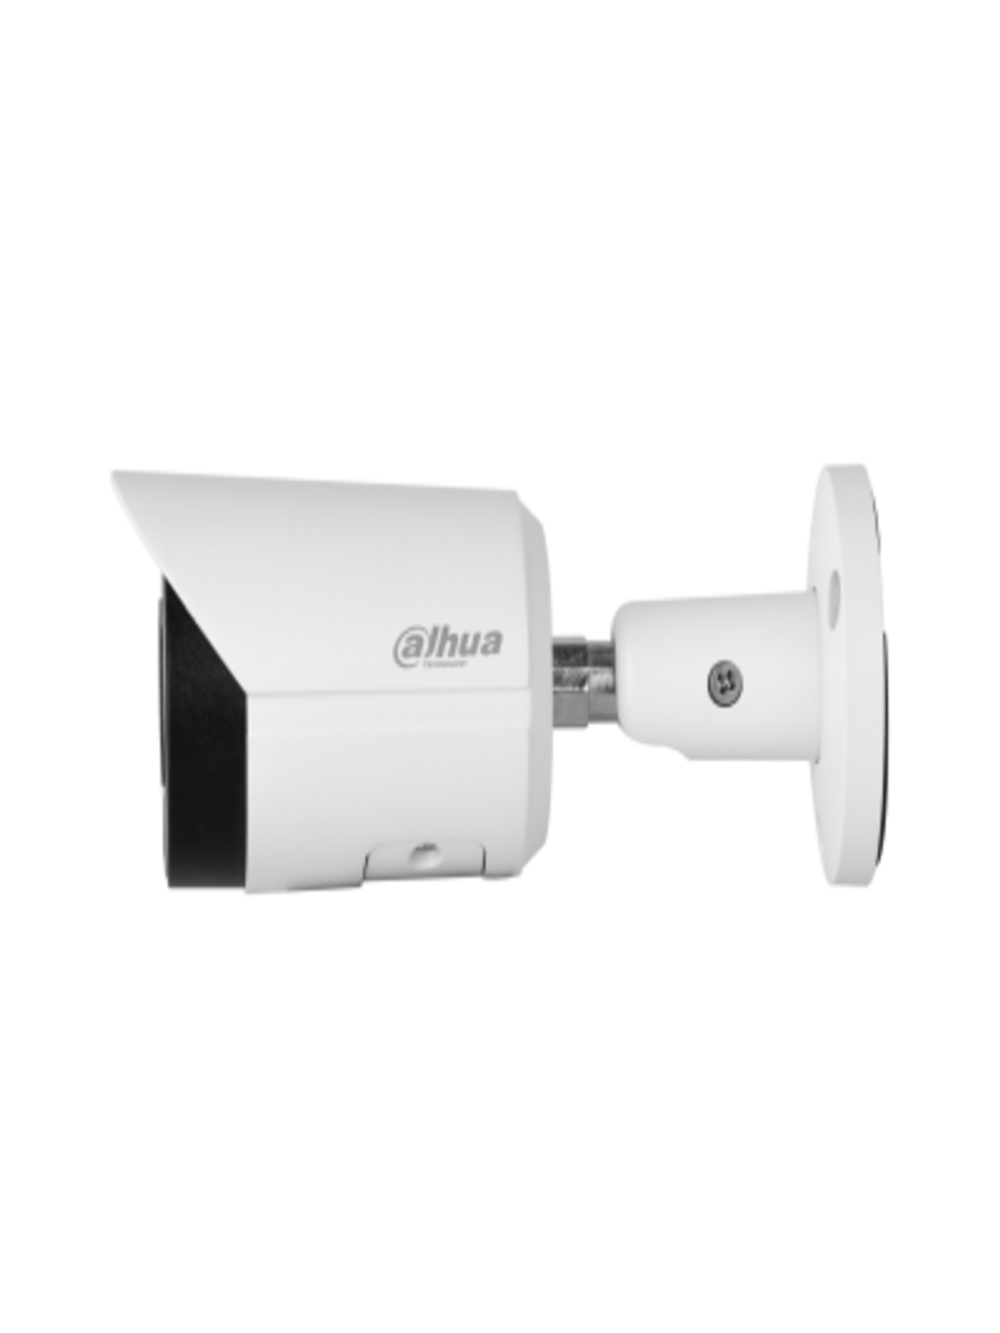 Видеокамера Dahua 8MP DH-IPC-HFW2849SP-S-IL-0360B